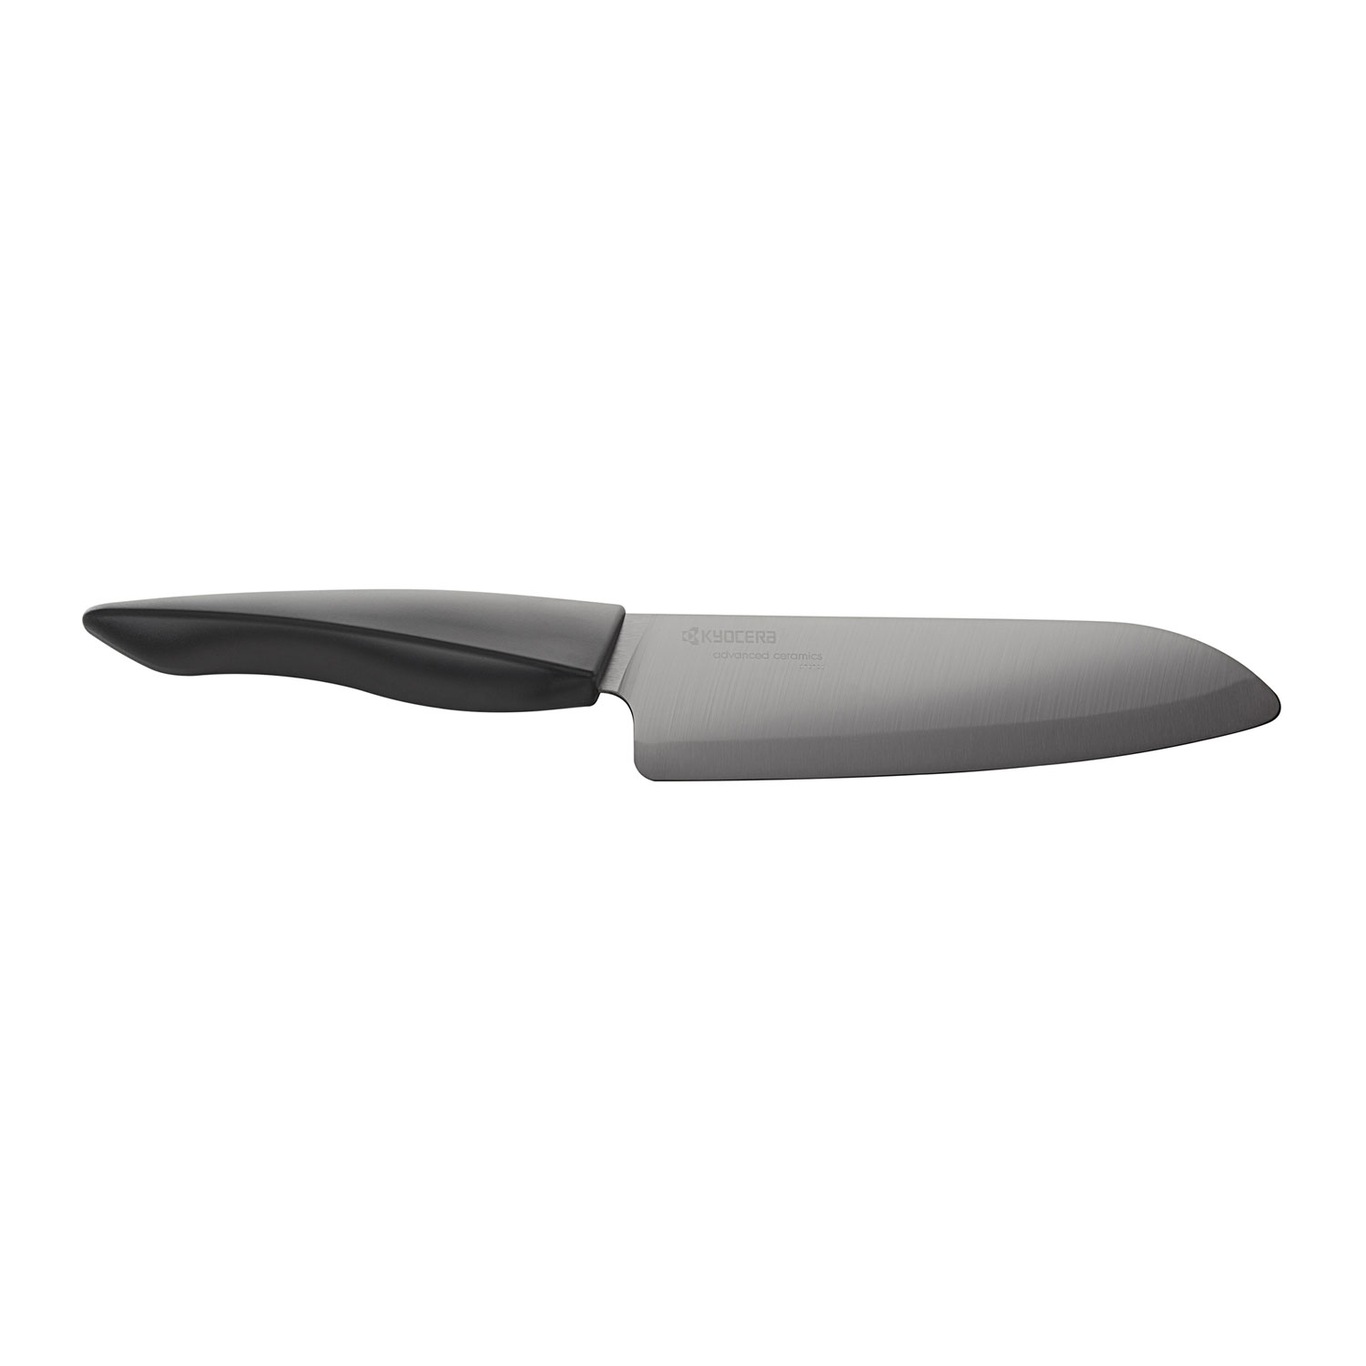 Shin Chef Knife / Santoku Knife 16 cm, Black